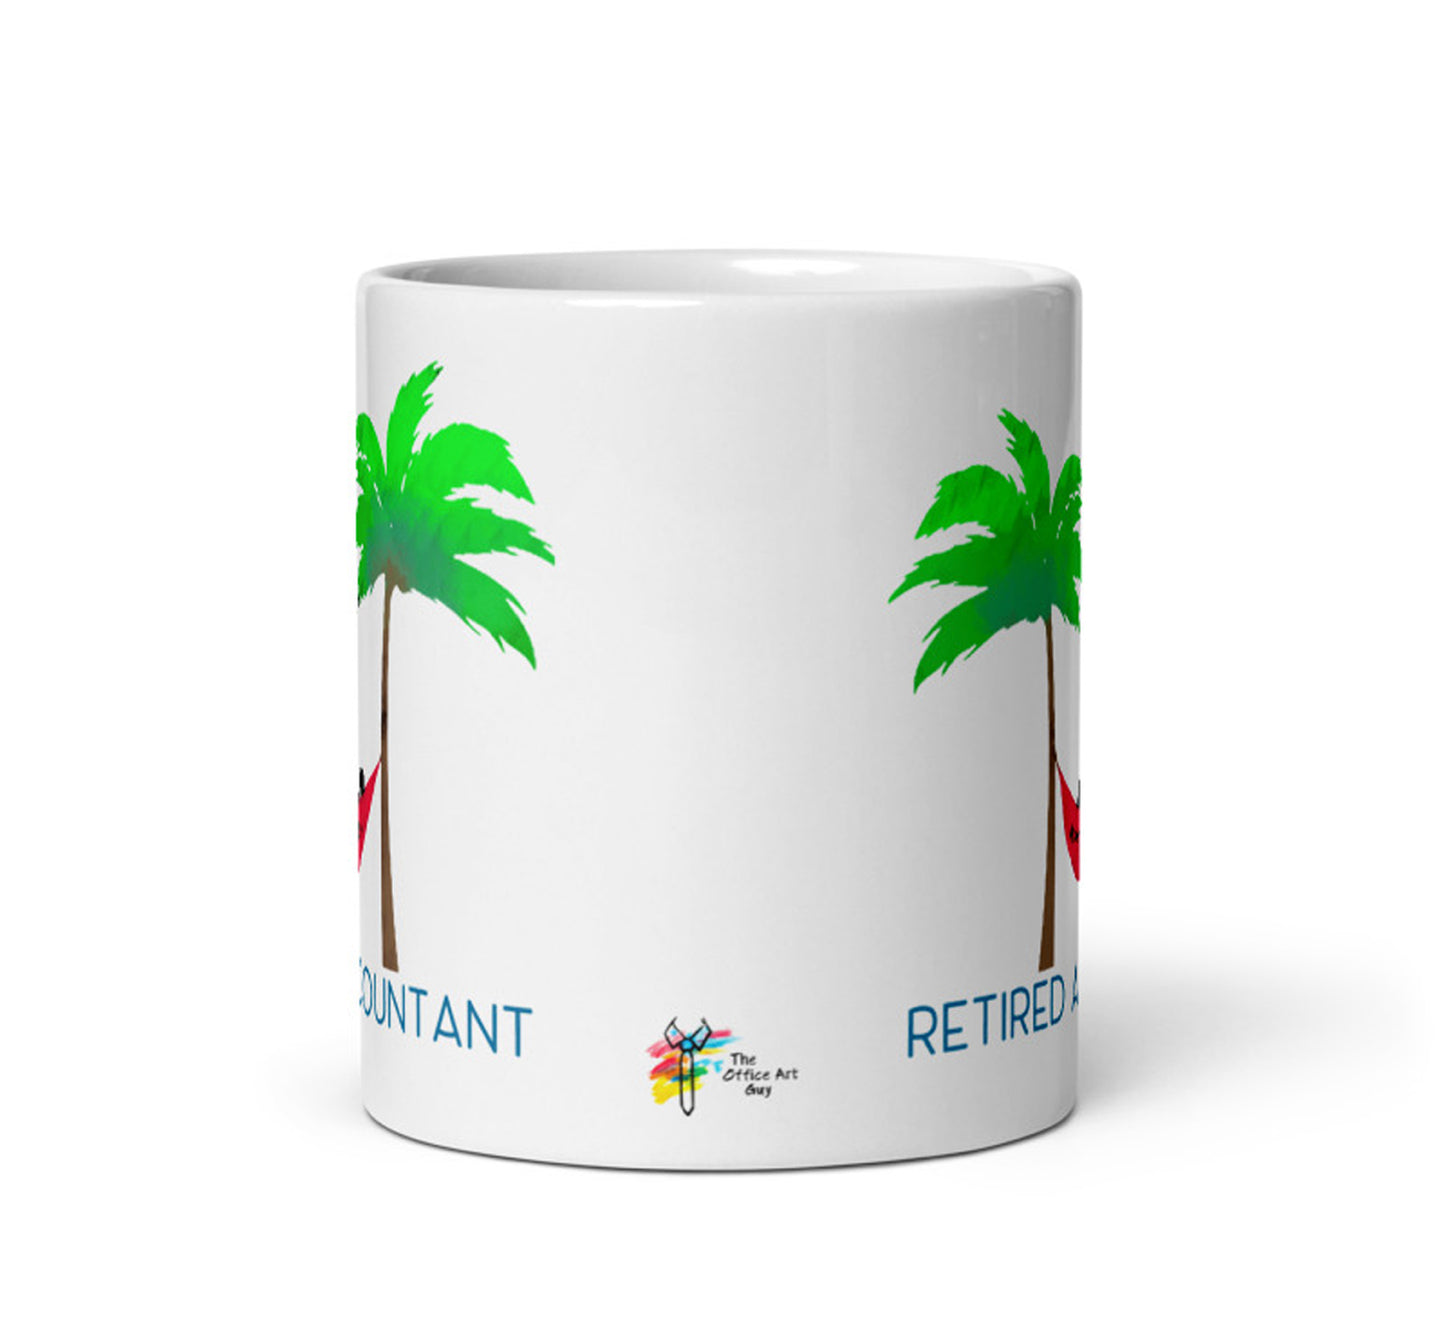 Retired Accountant Gift Personalized Mug